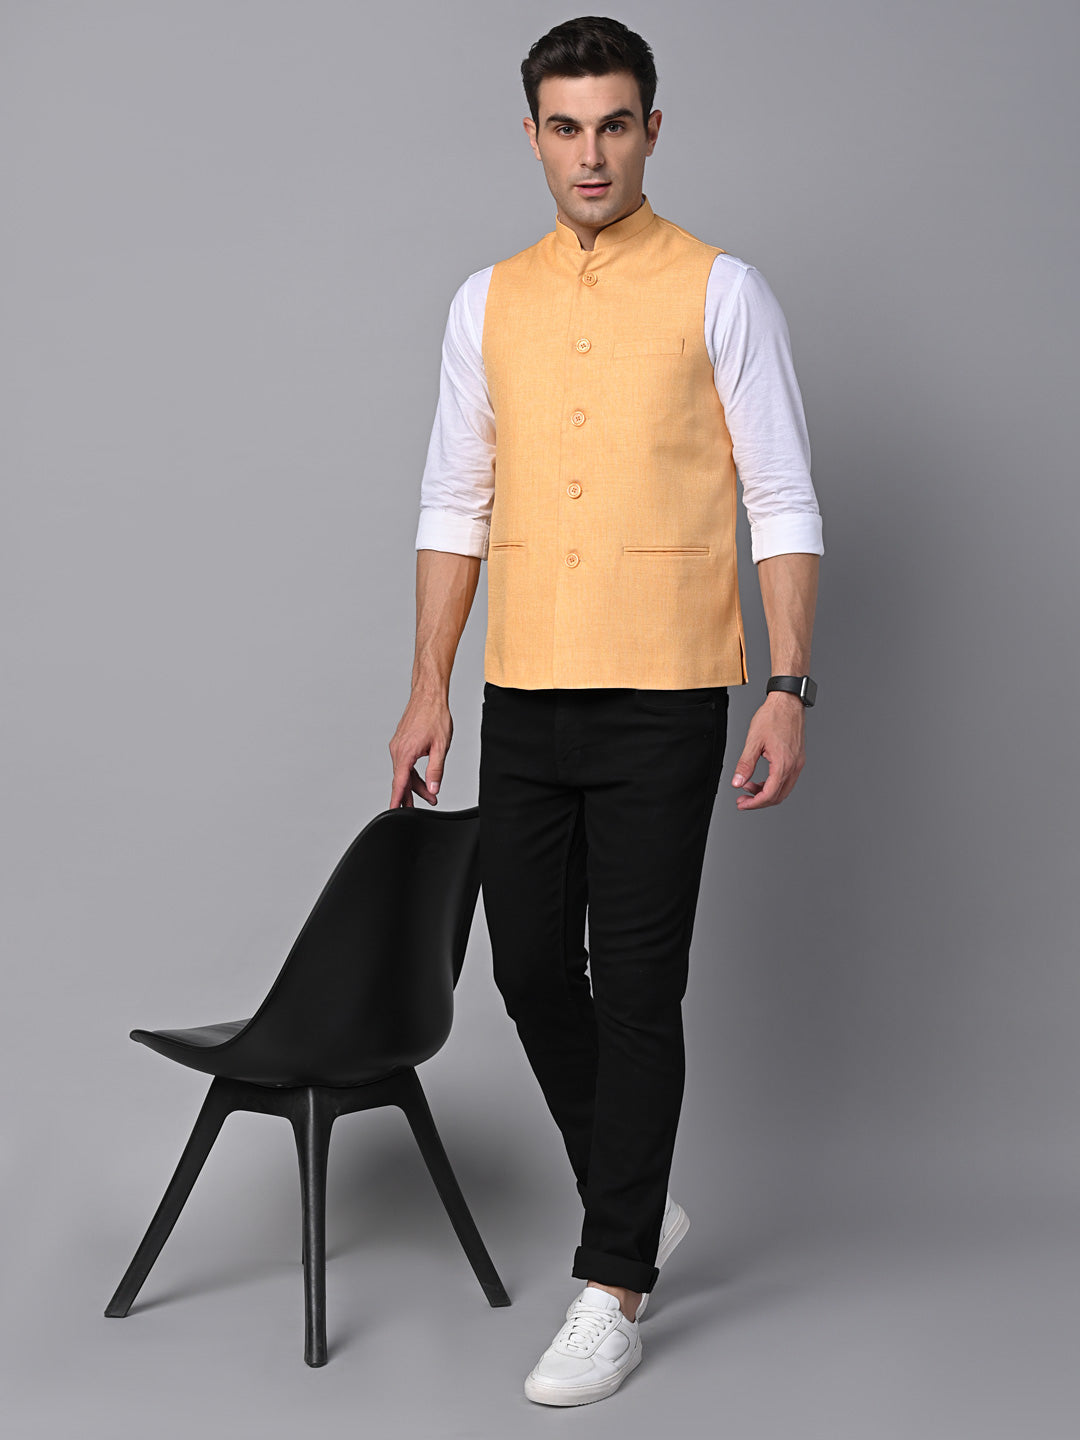 Vastraa Fusion Men's Indian Traditional Cotton Nehru Jacket/Waistcoat